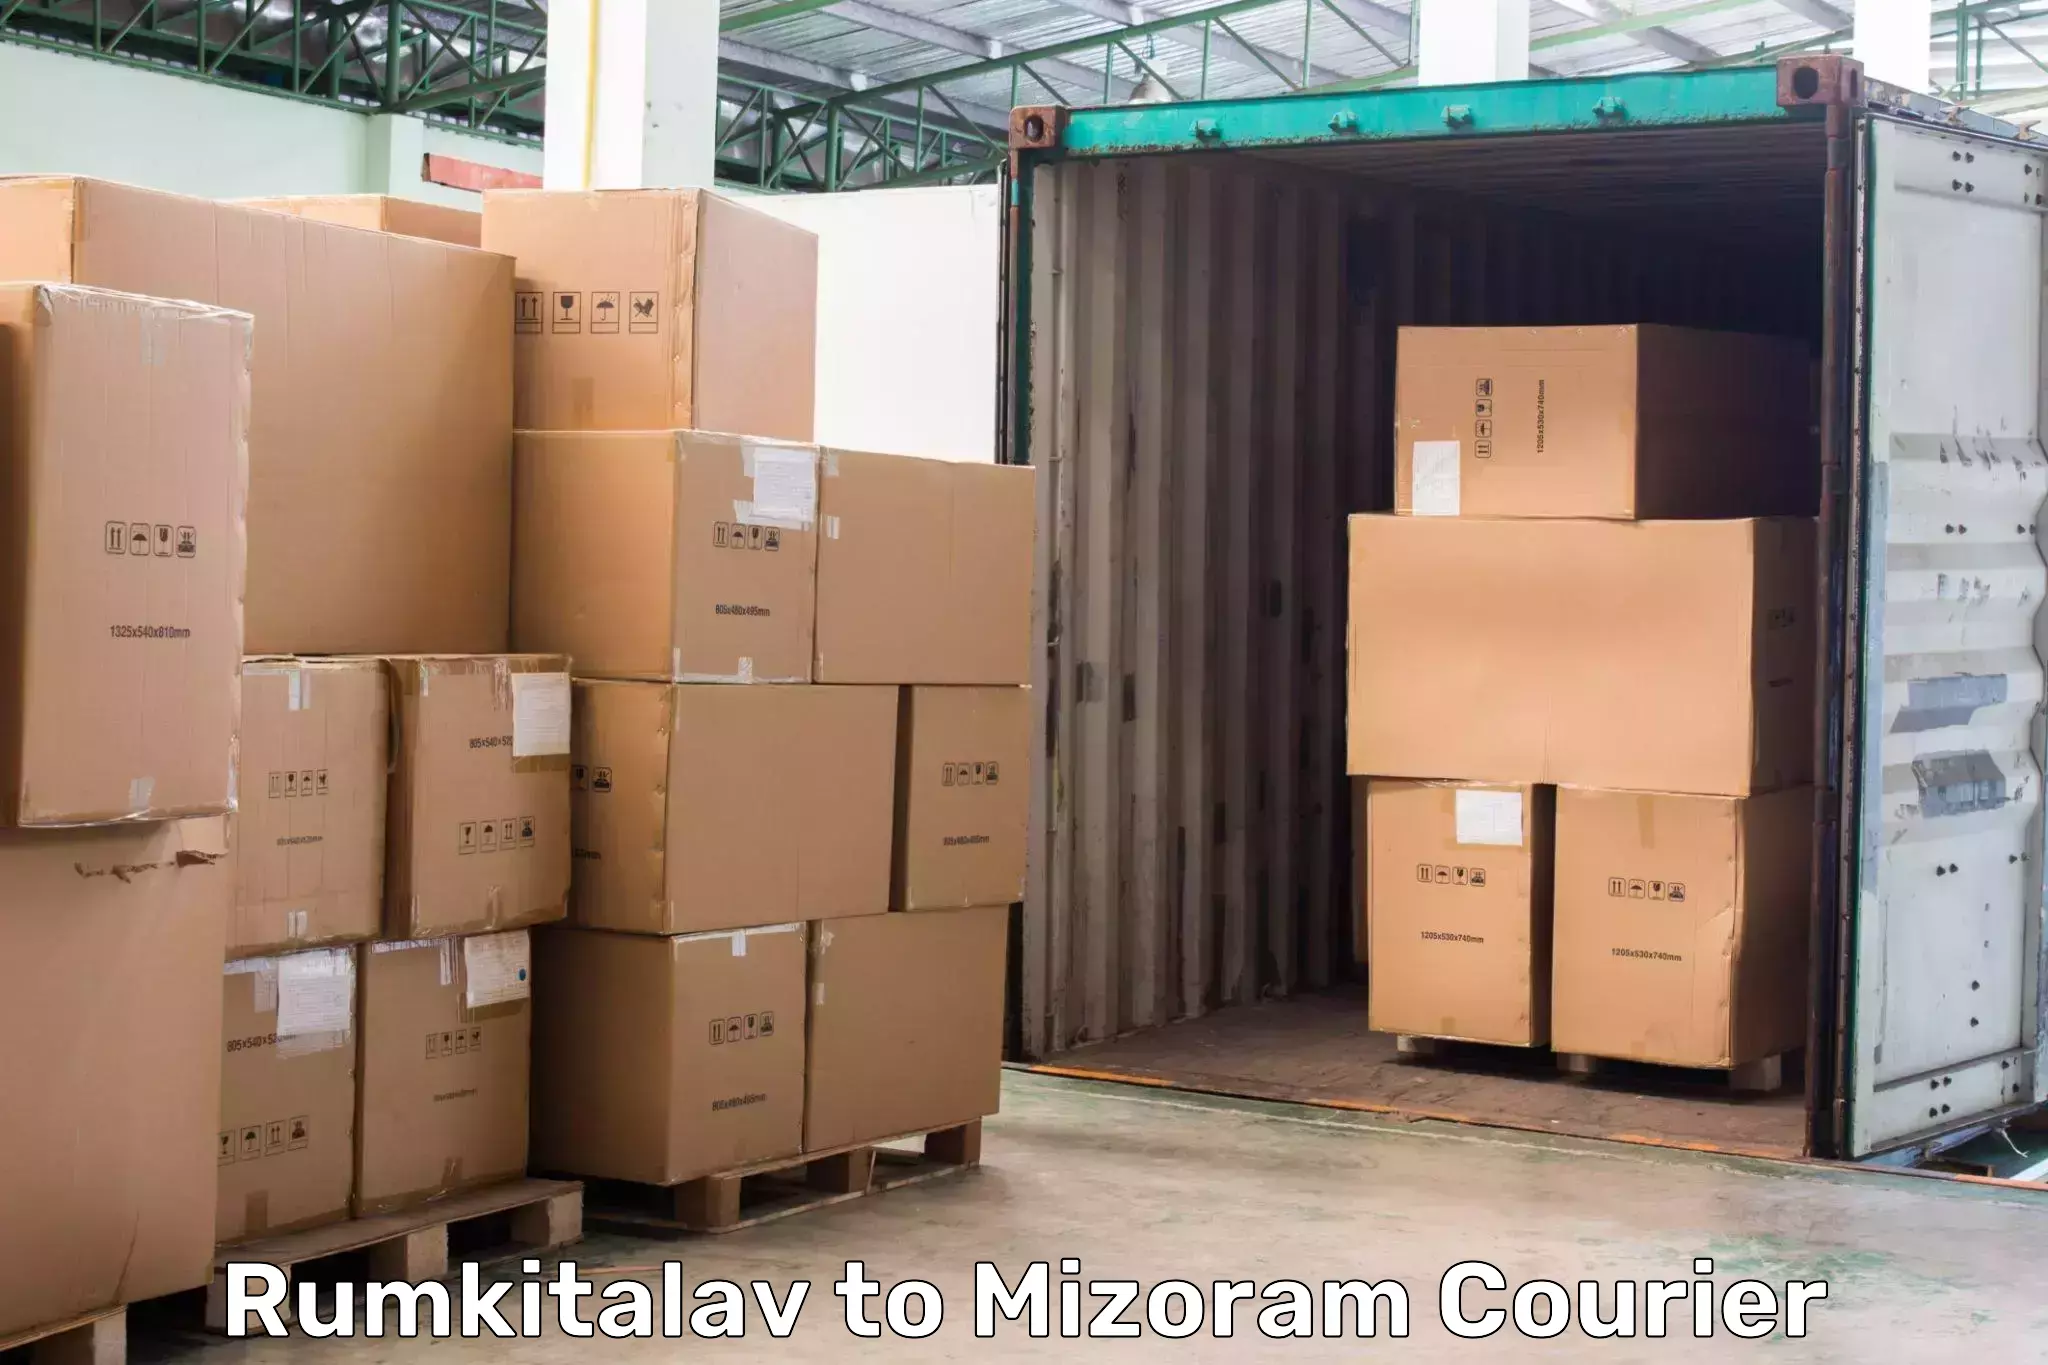 Local courier options Rumkitalav to Mizoram